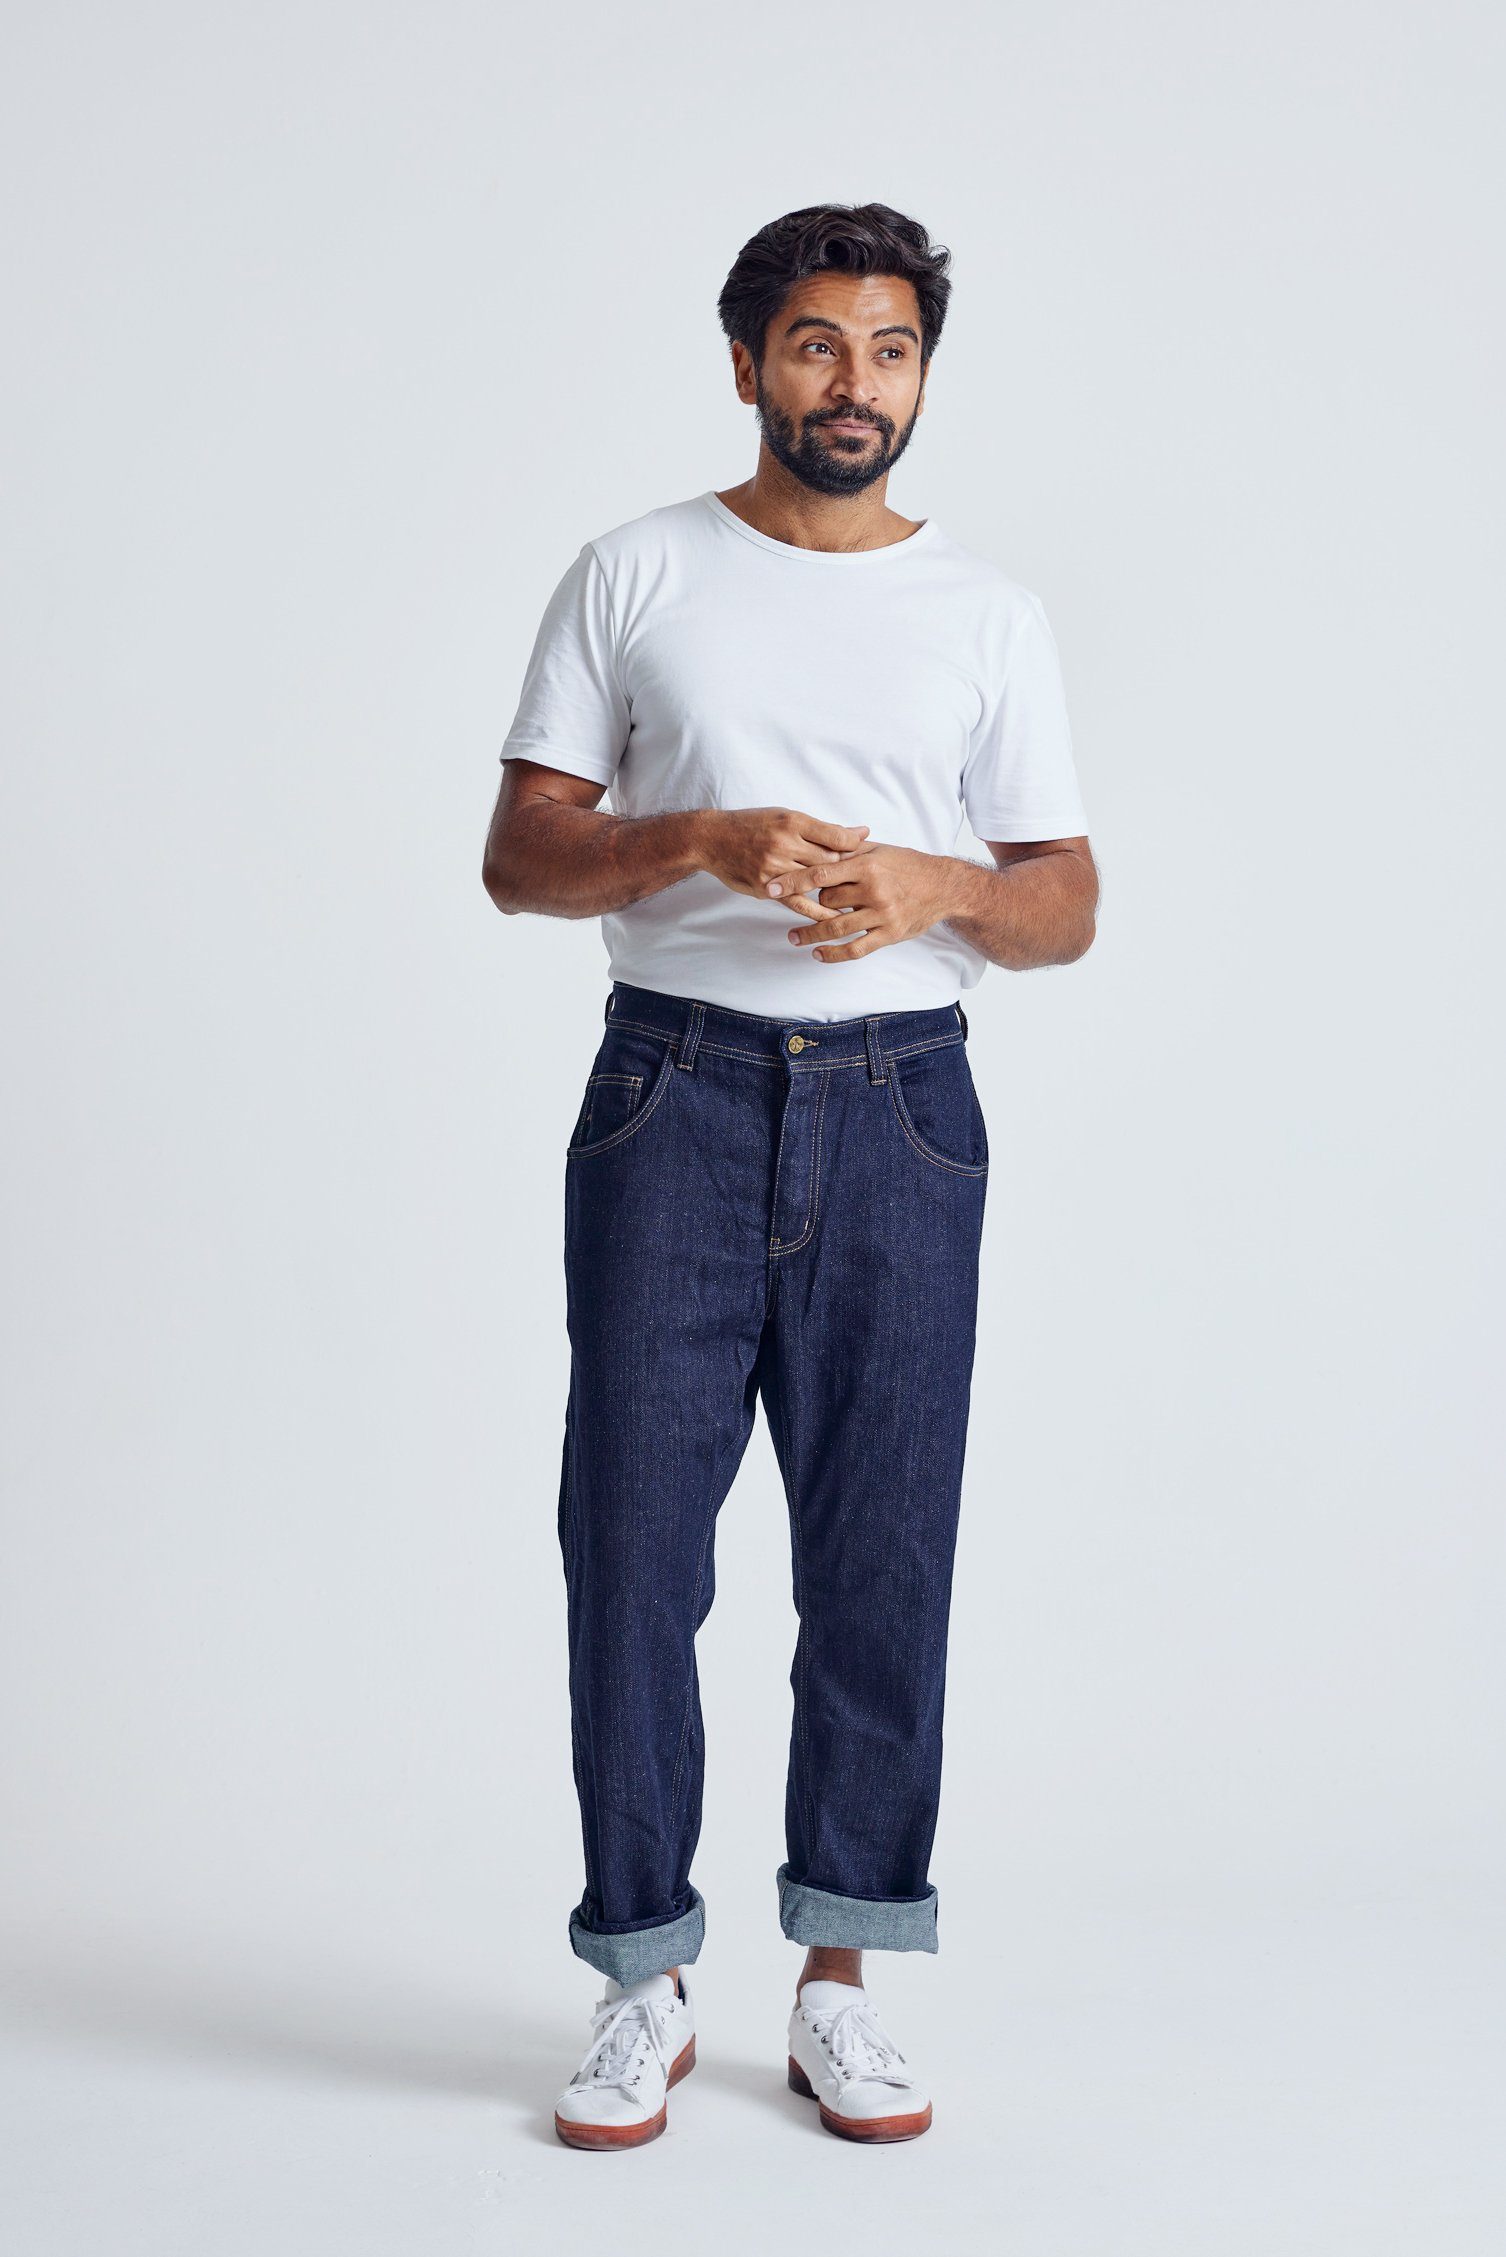 SATCH Rinse - GOTS Organic Cotton Jeans by Flax & Loom, 36 / Regular